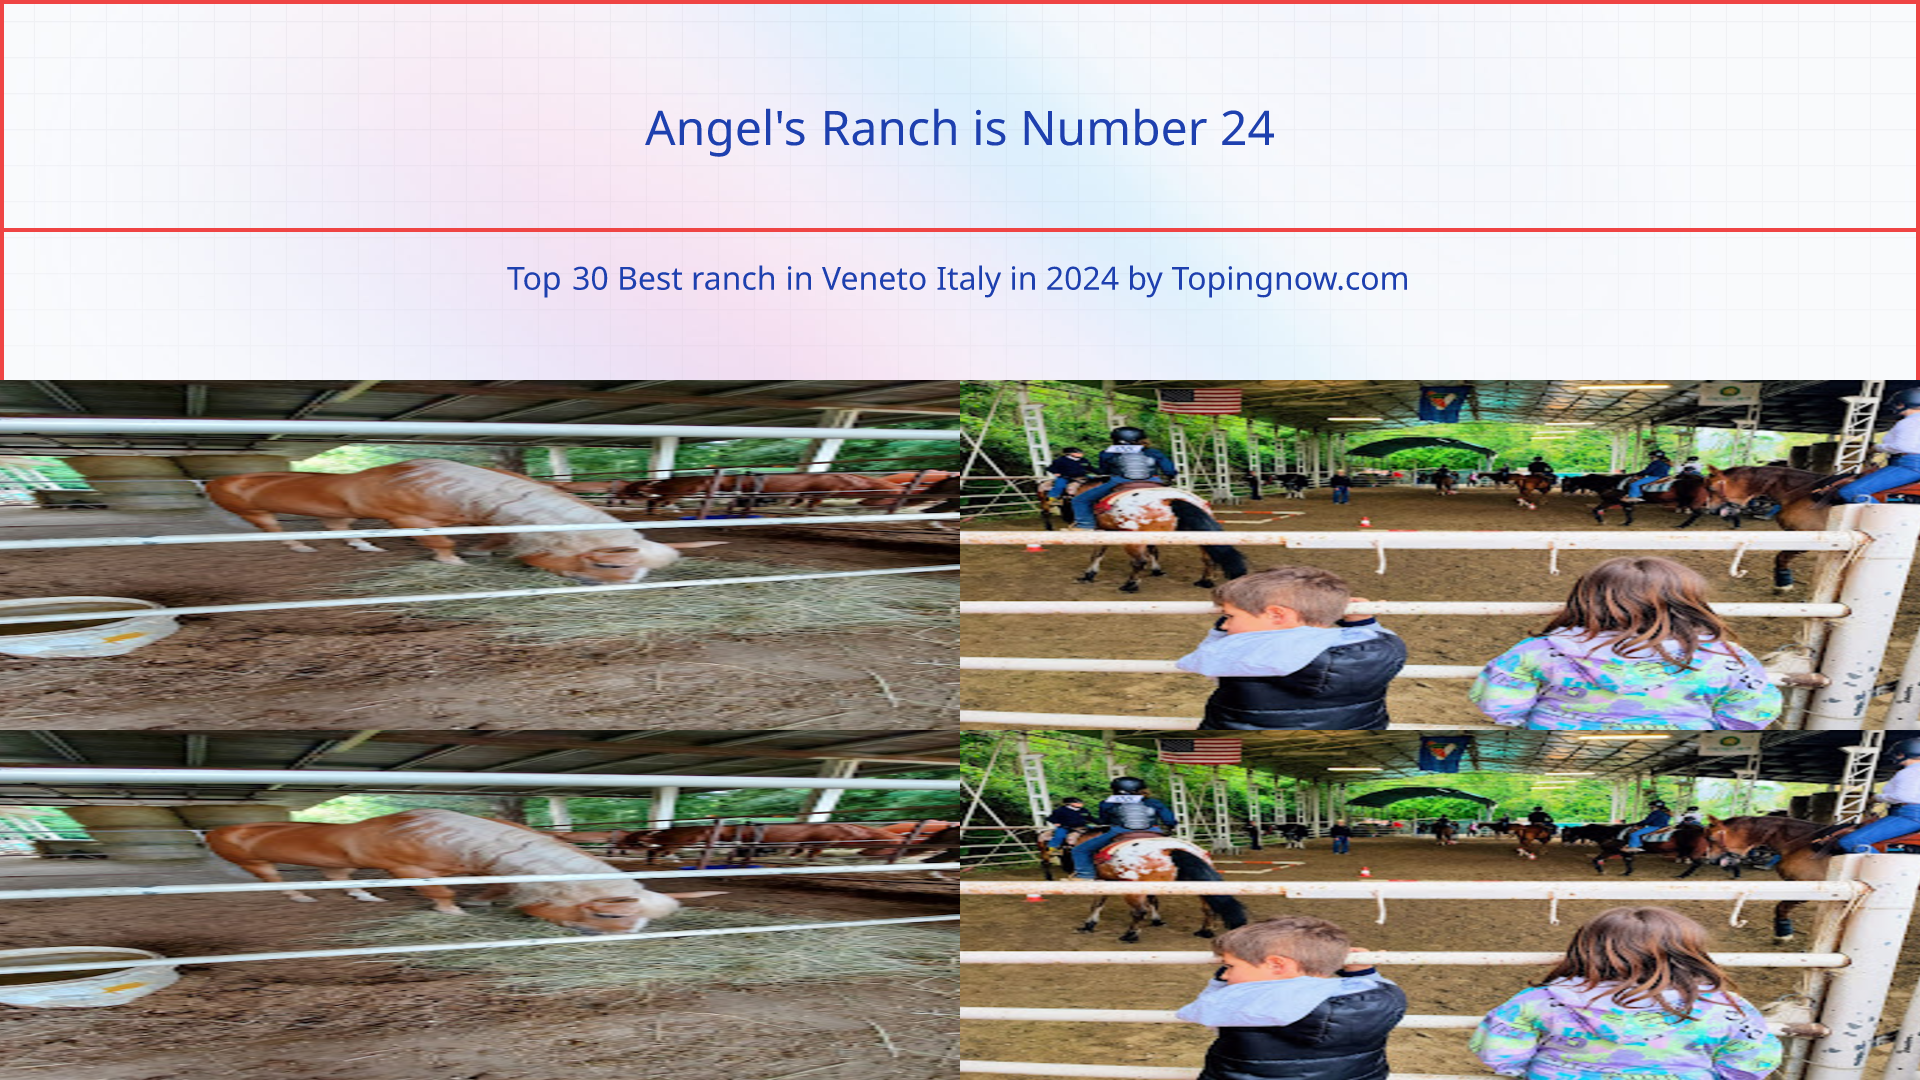 Angel's Ranch: Top 30 Best ranch in Veneto Italy in 2024